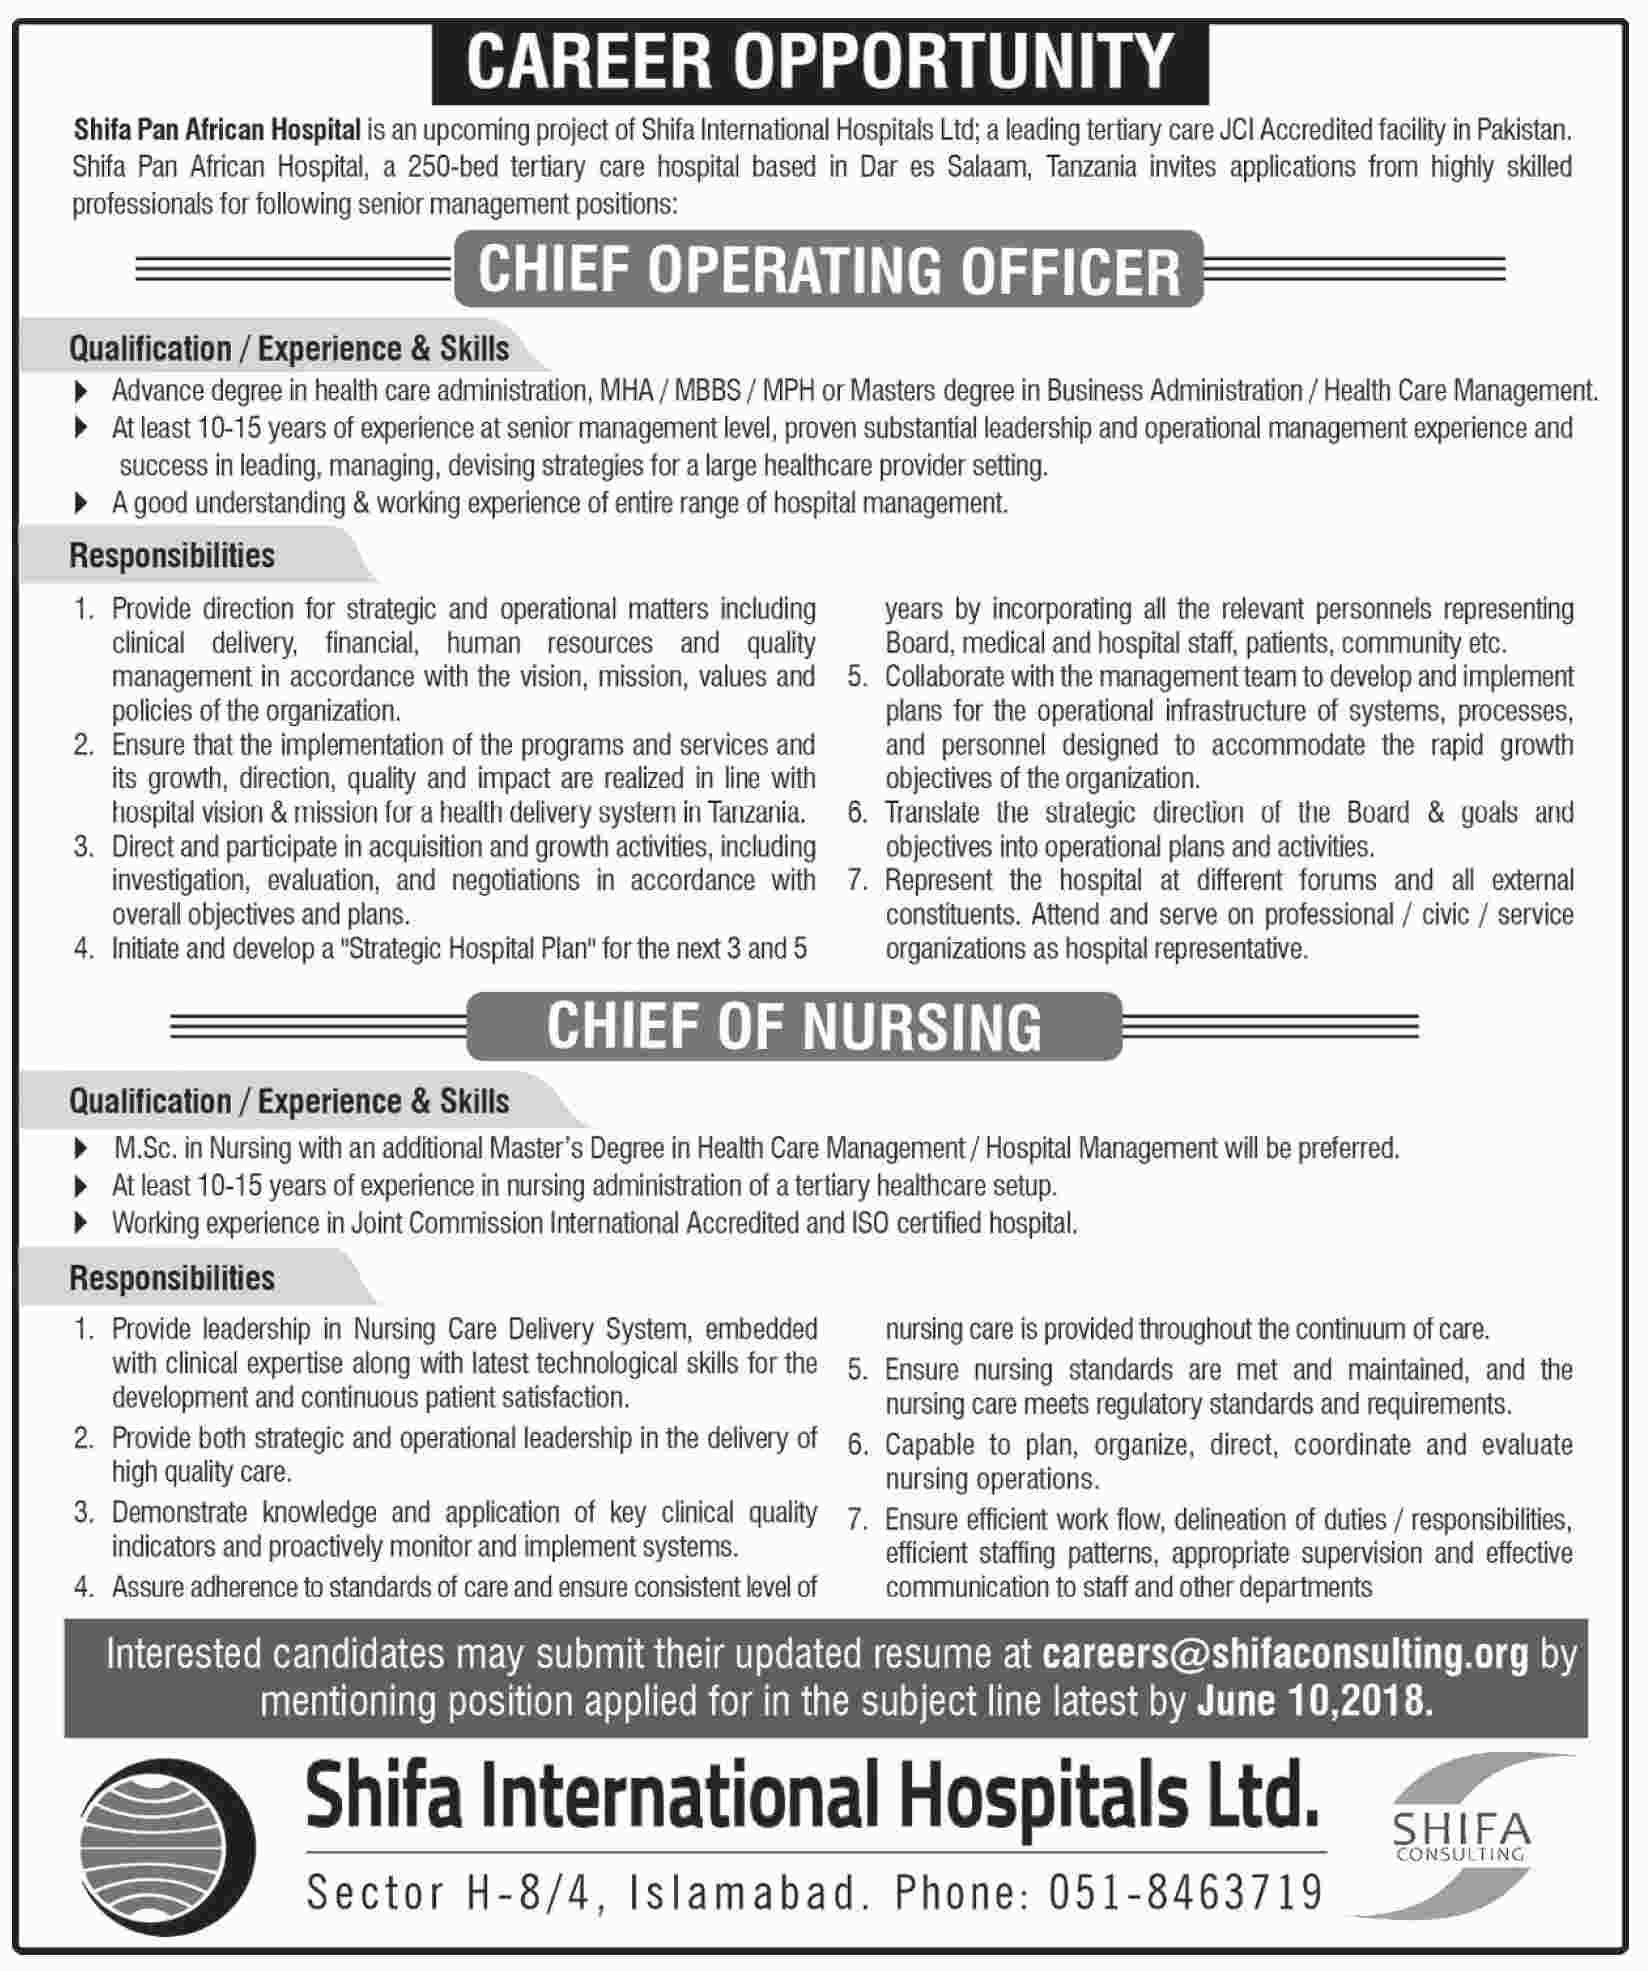 Jobs in Shifa International Hospital Ltd 27 May 2018